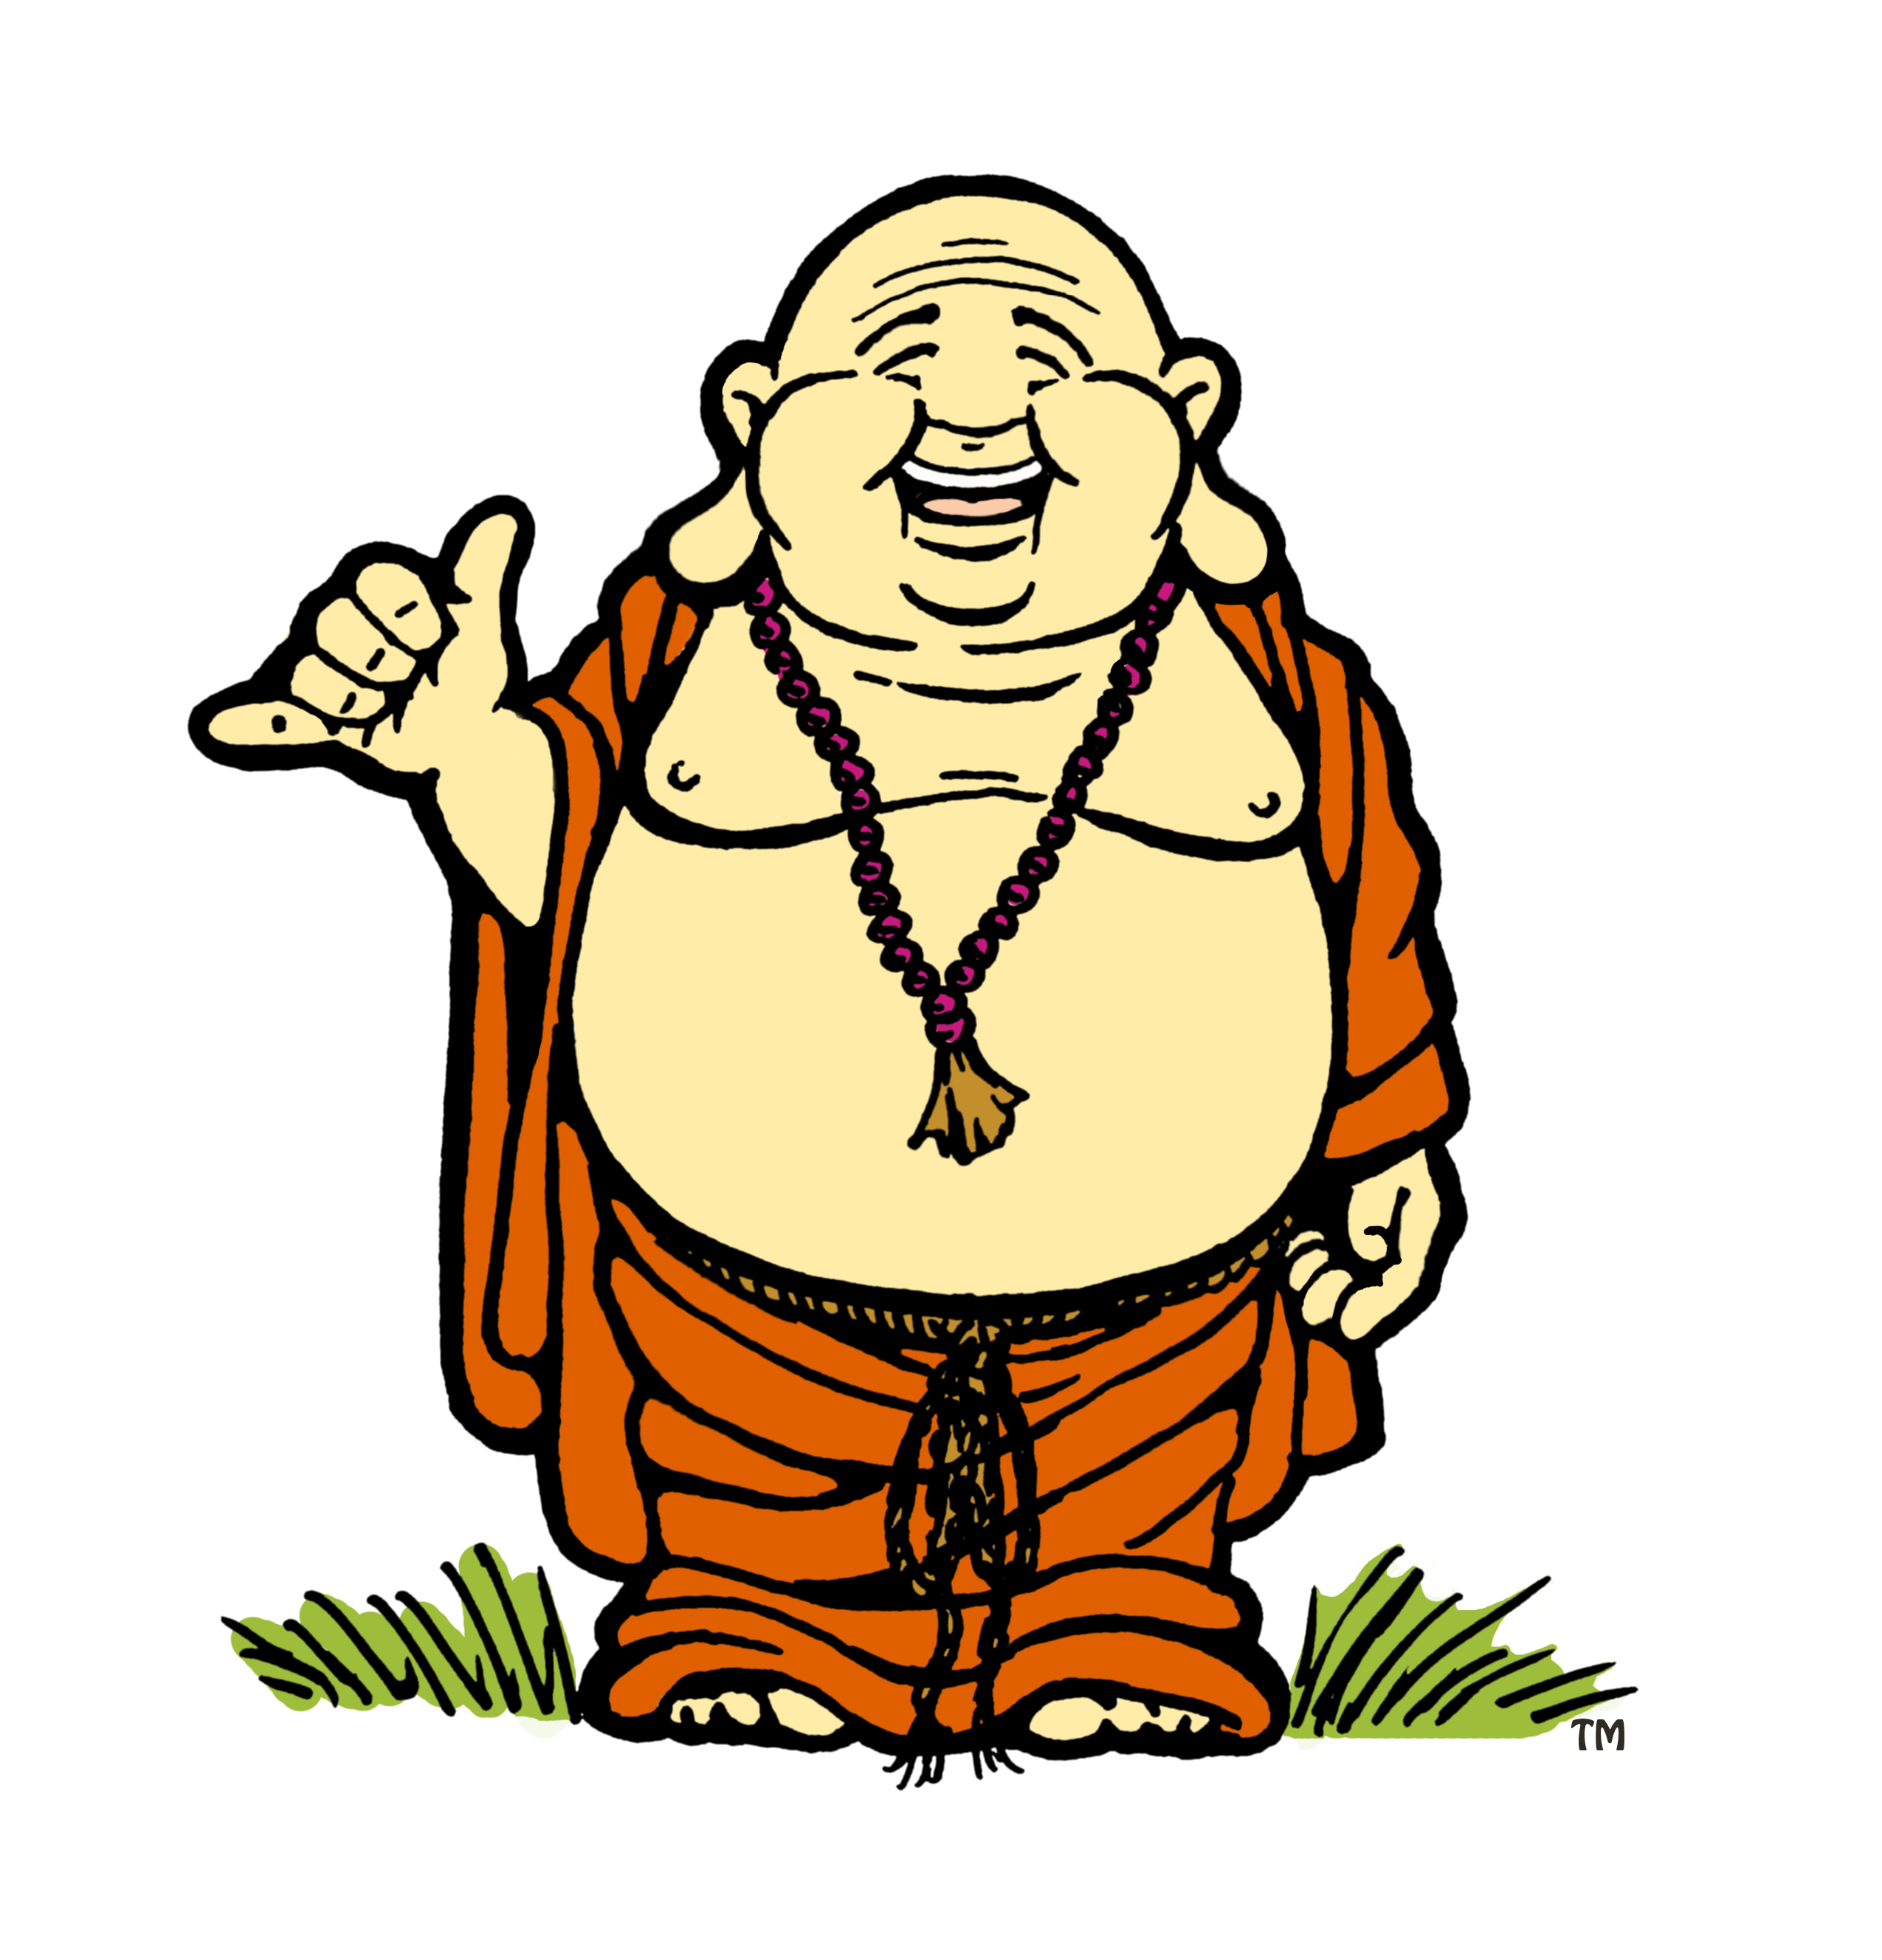 Buddha Cartoon Picture : Image 3237911: Laughing Buddha From Crestock ...